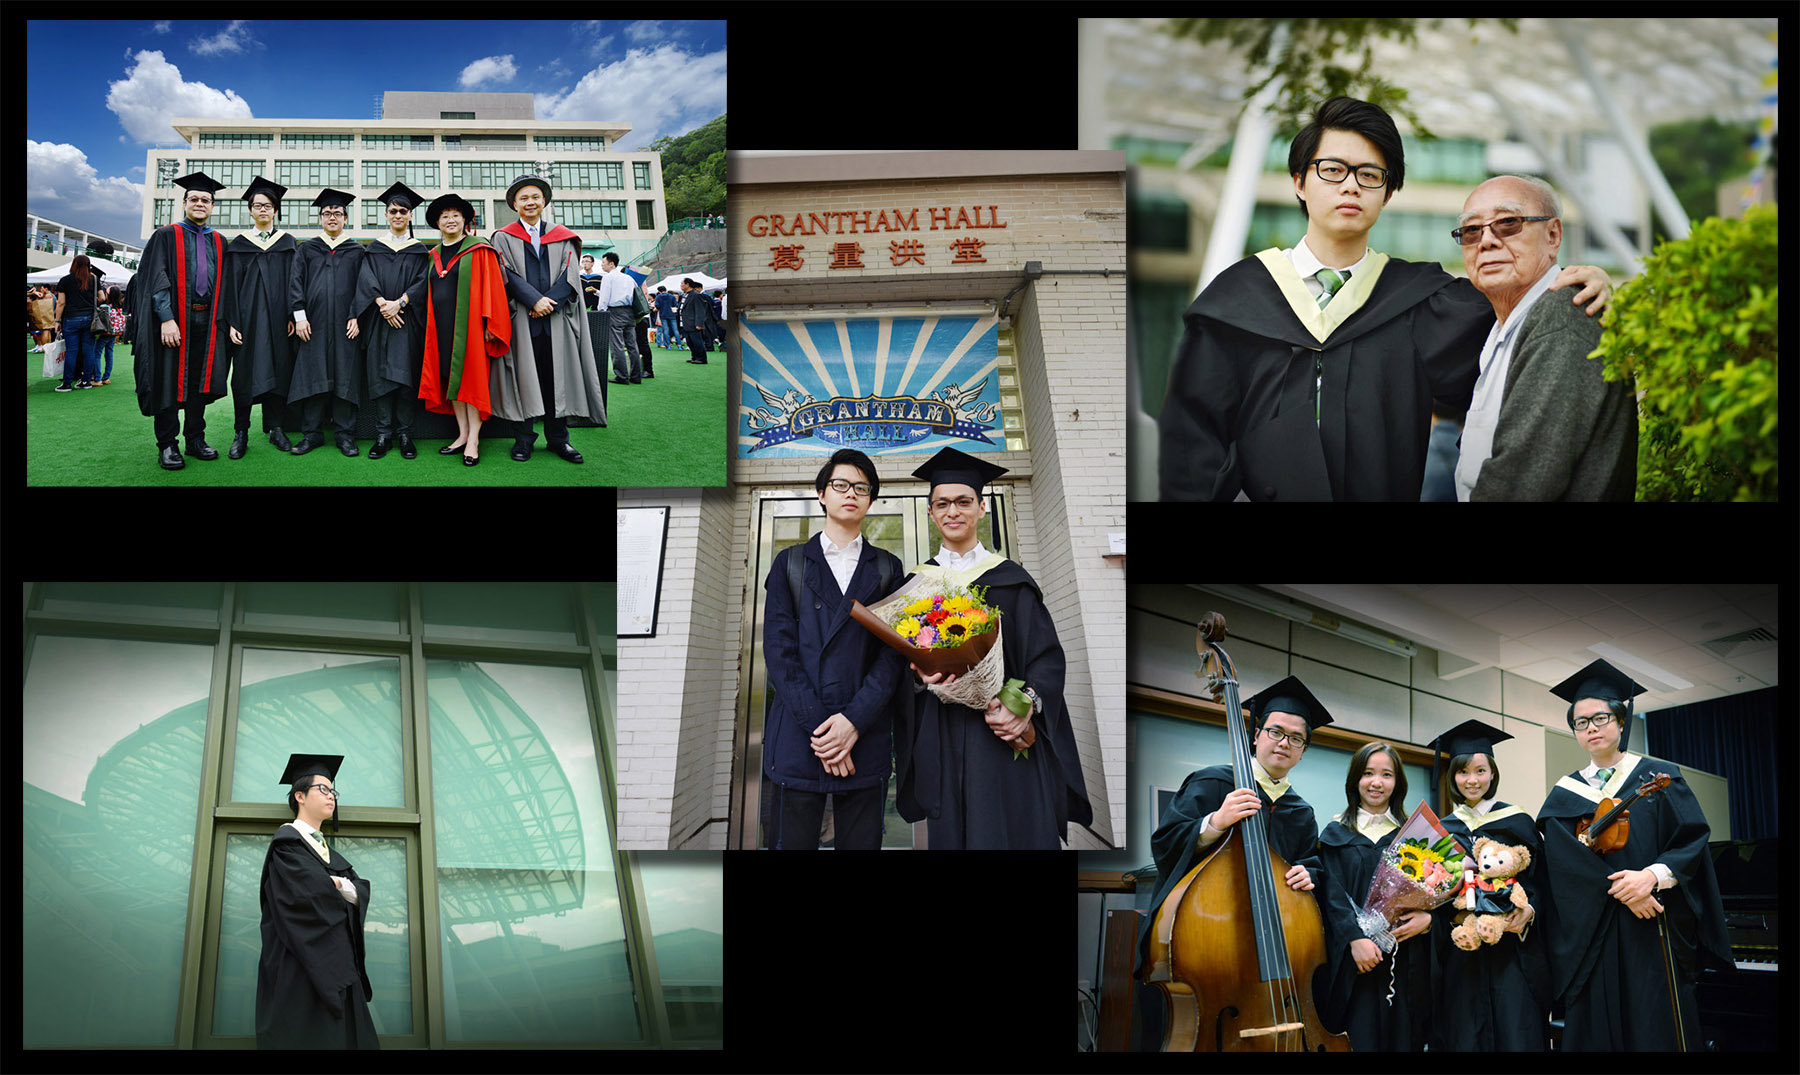 Eden Man之攝影師紀錄: Capturing wonderful time in Graduated day !